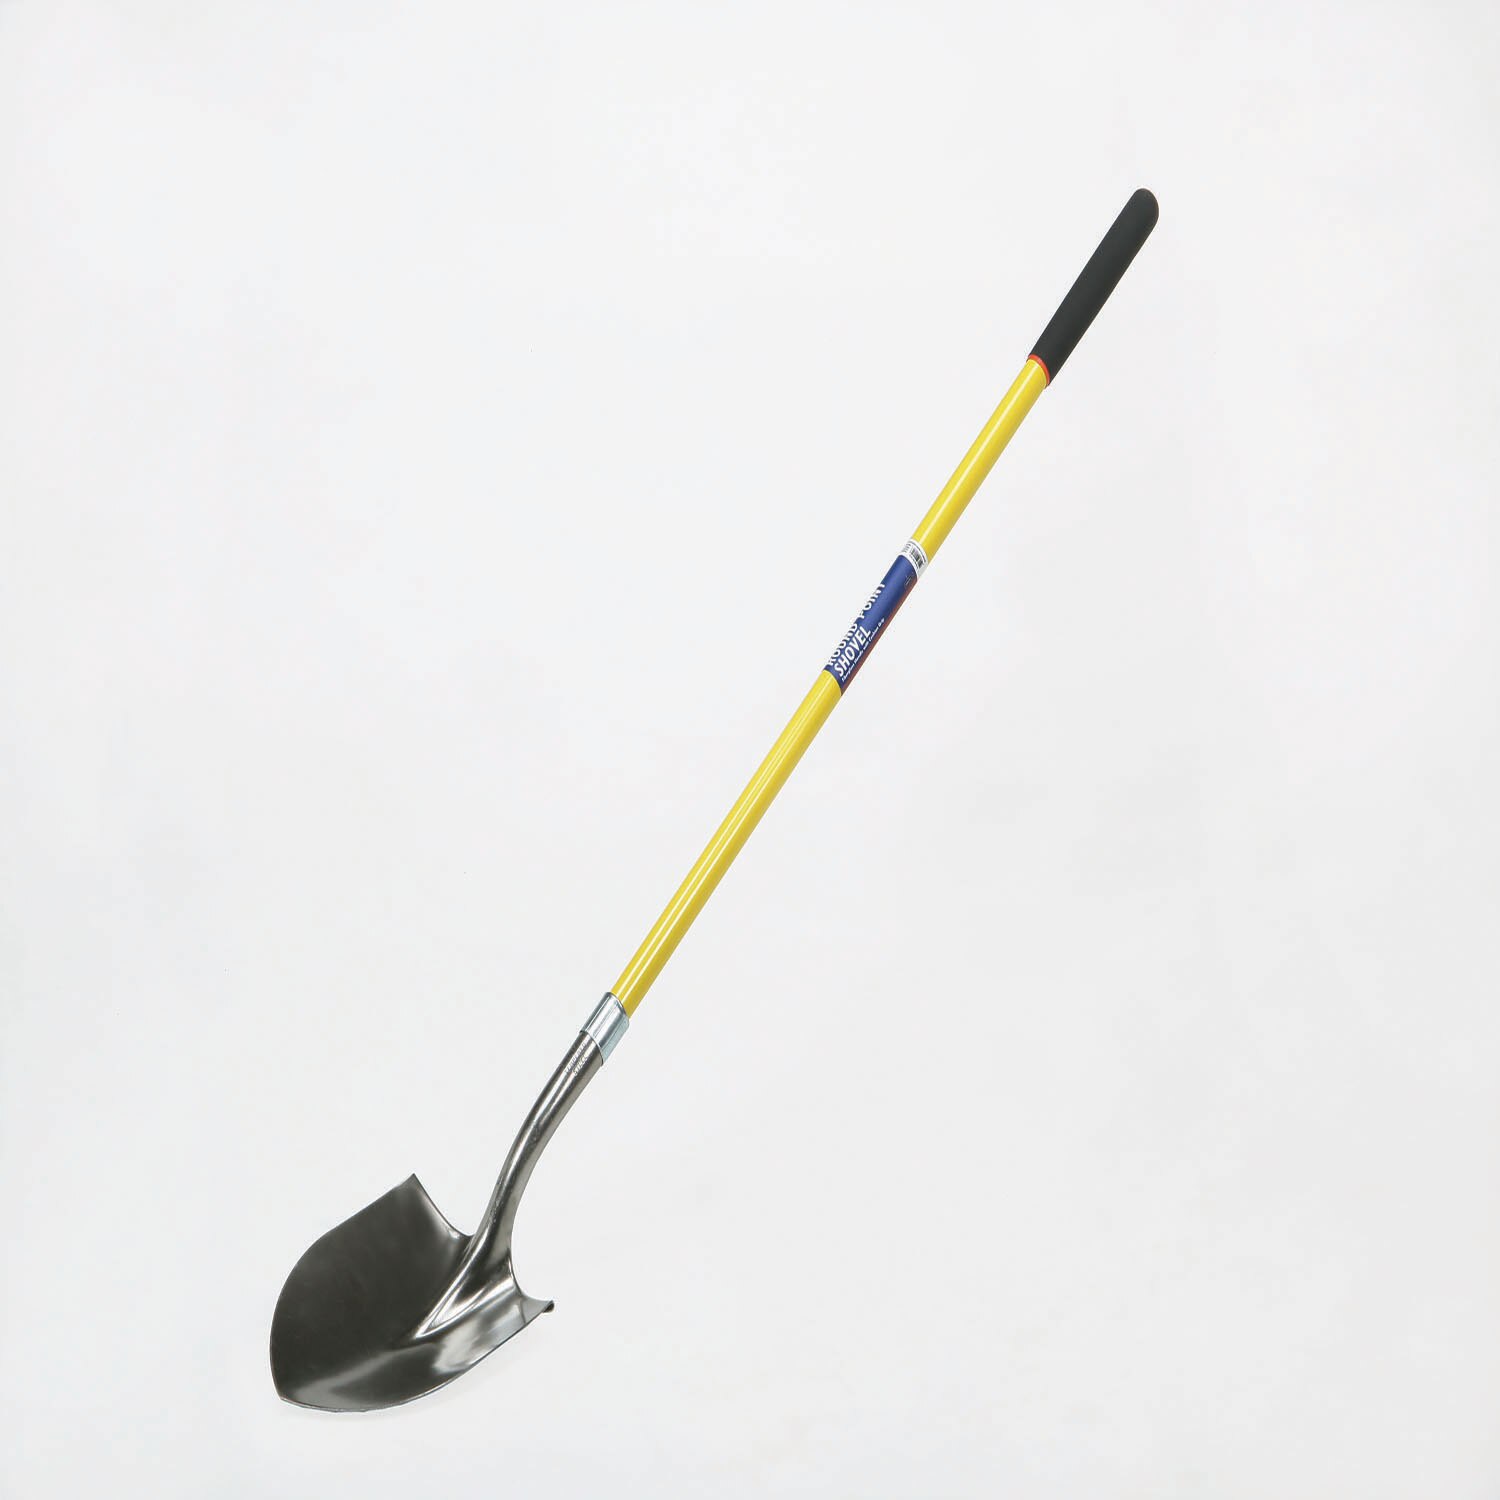 Shovel, Round Point, Open Back, Industrial Grade, 48" Fiberglass Handle, Cushioned Grip